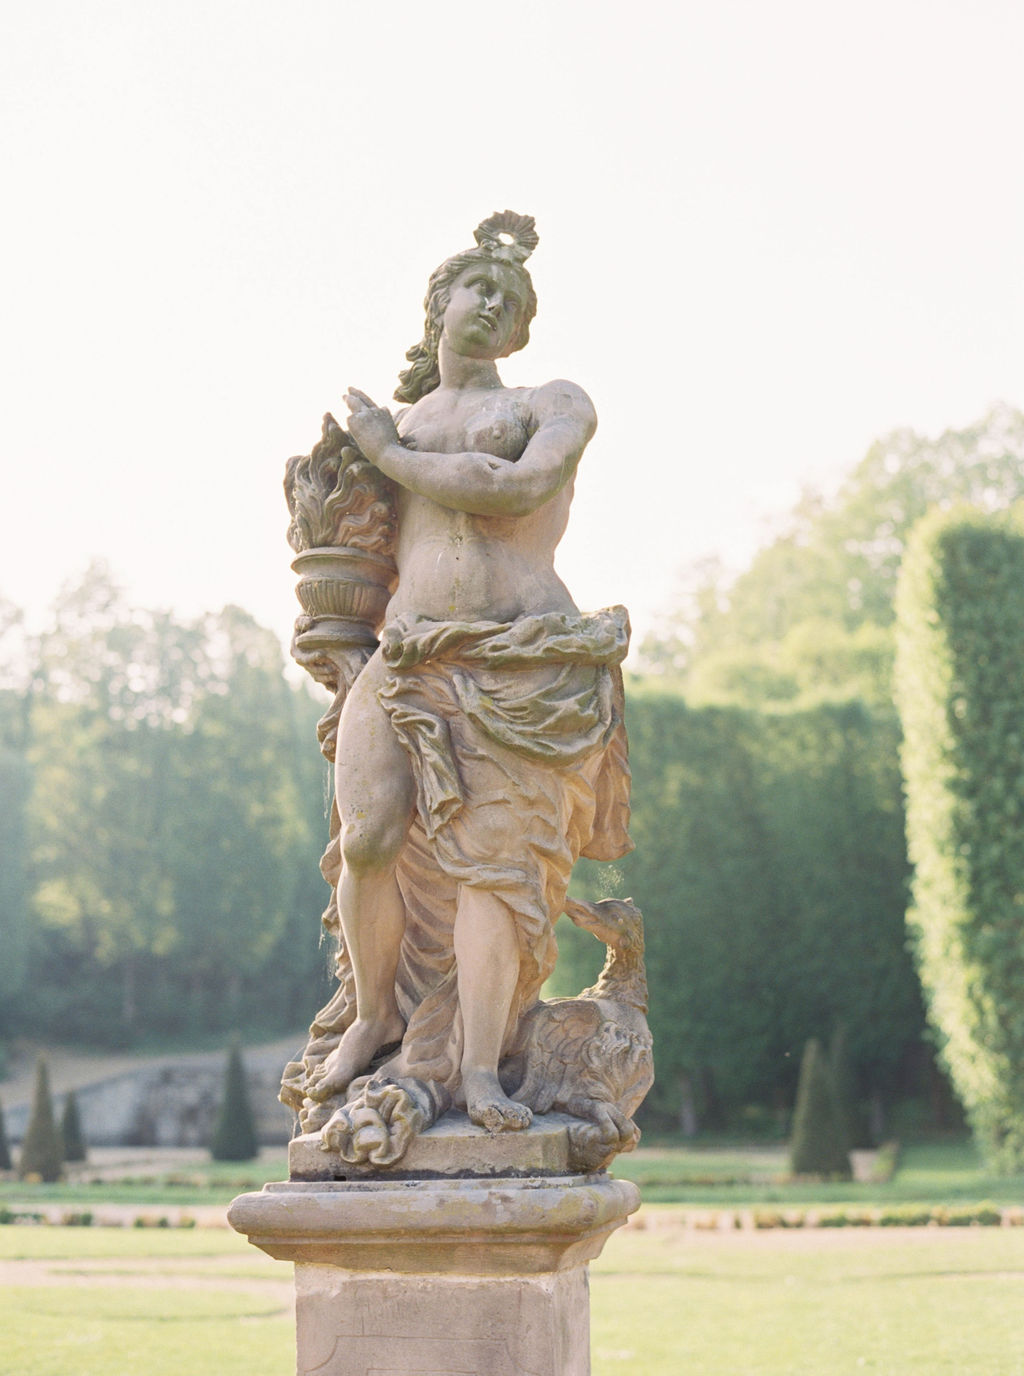 travellur_photoshoot_duchesse_de_villette_chateau_gardens_statue_france.jpg